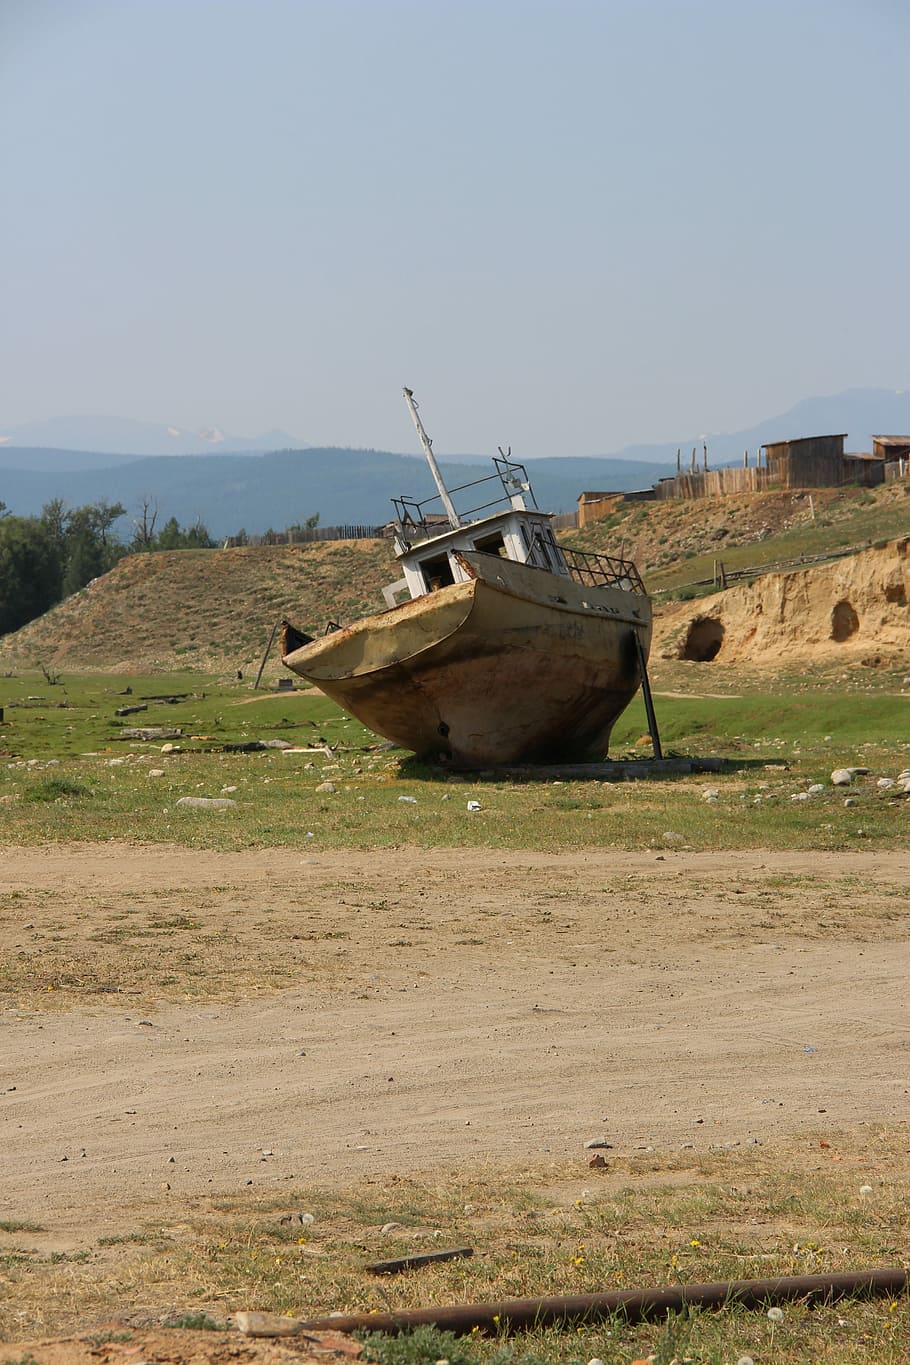 Barge, Baikal, Summer, Sun, Boat, Sand, summer, sun, decrepitude, abandoned boat, wasteland